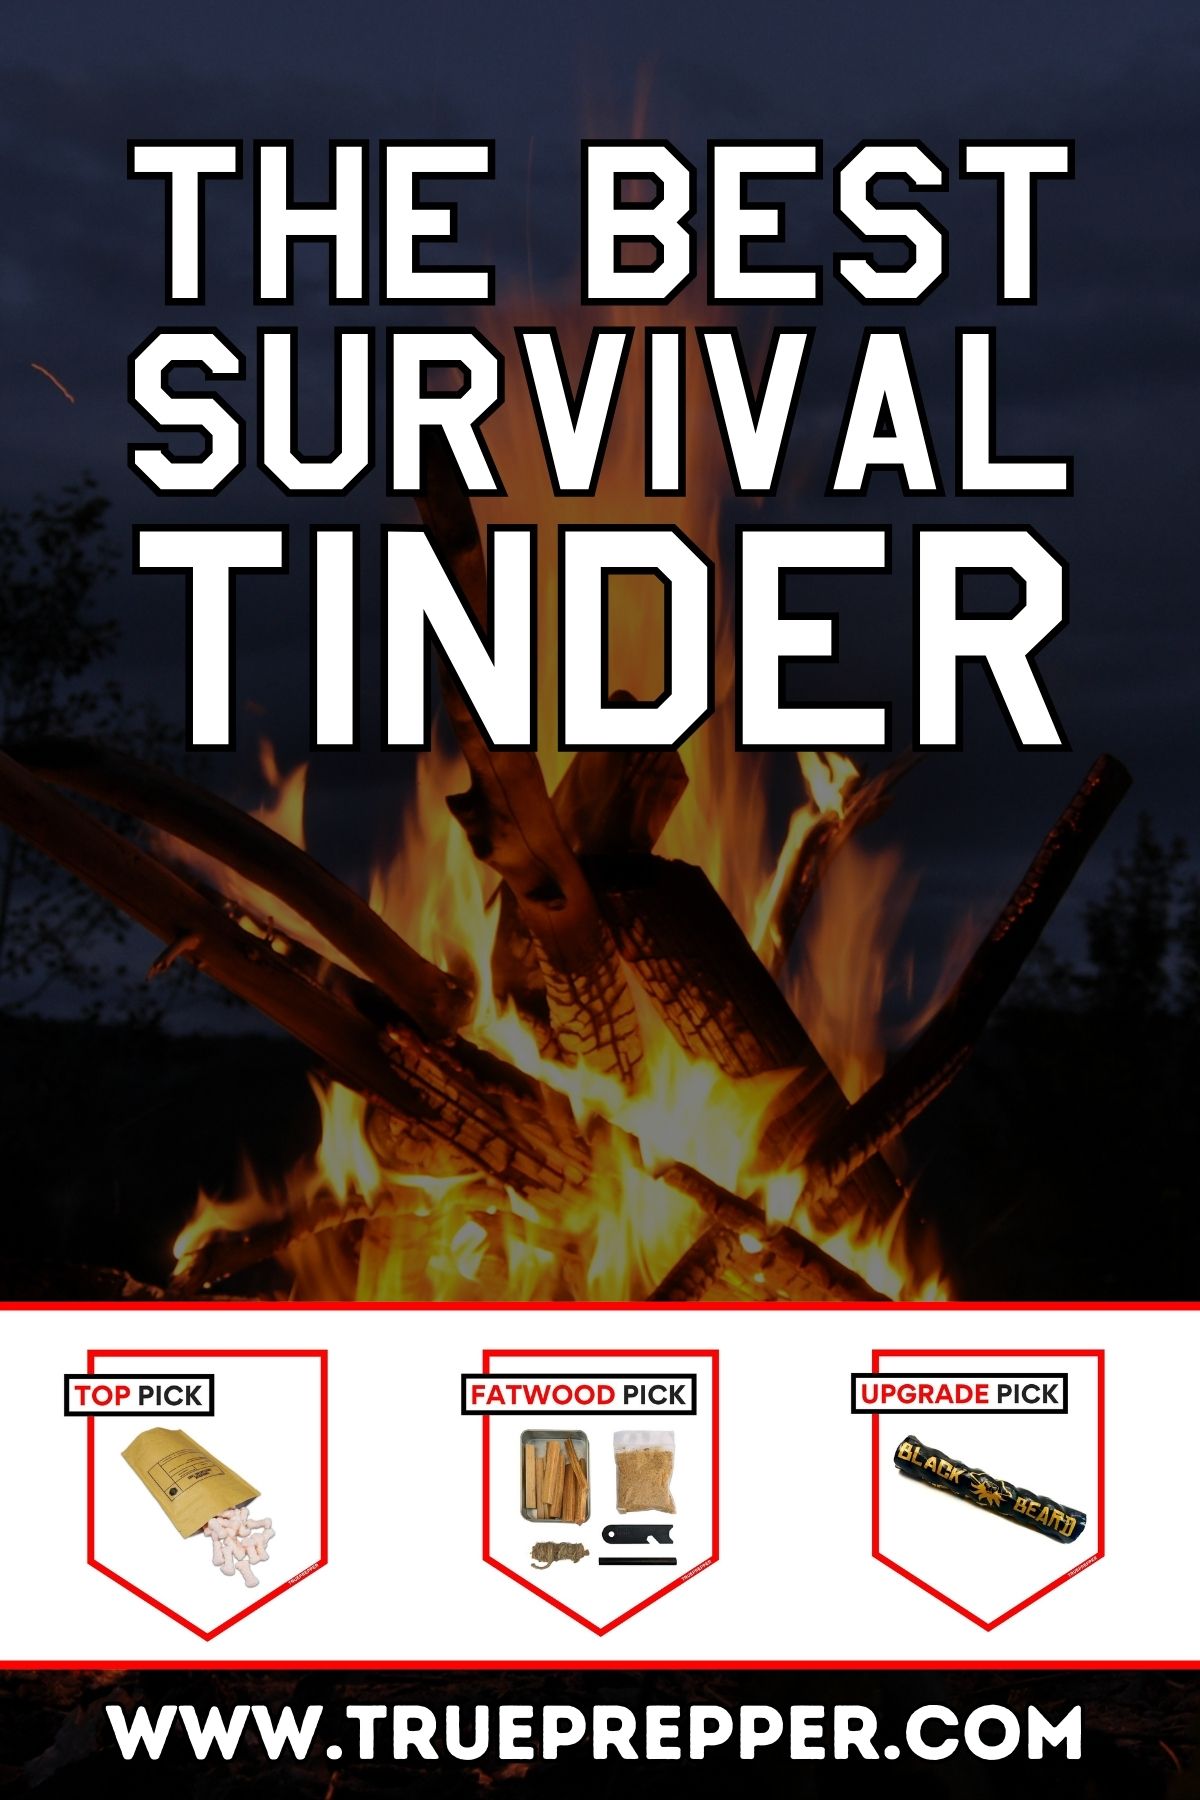 The Best Survival Tinder